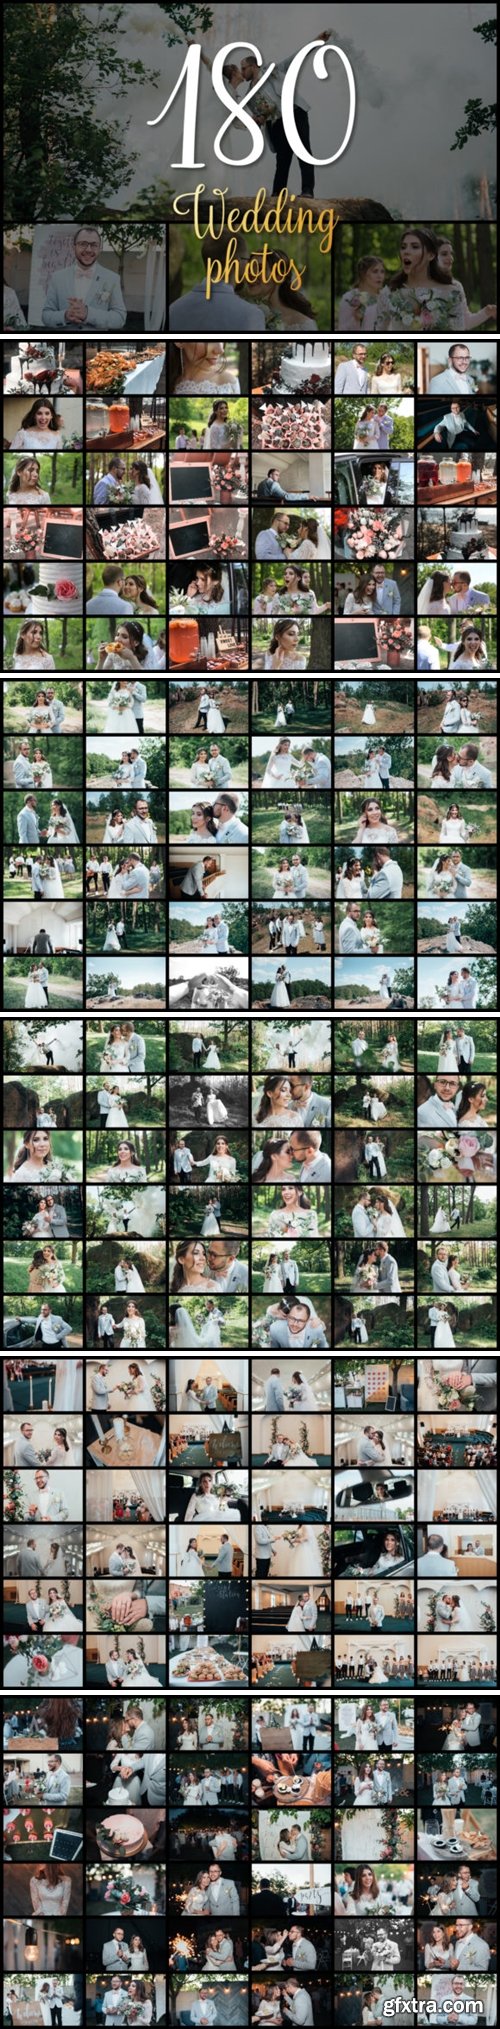 Set of 180 Wedding Photos 6089718